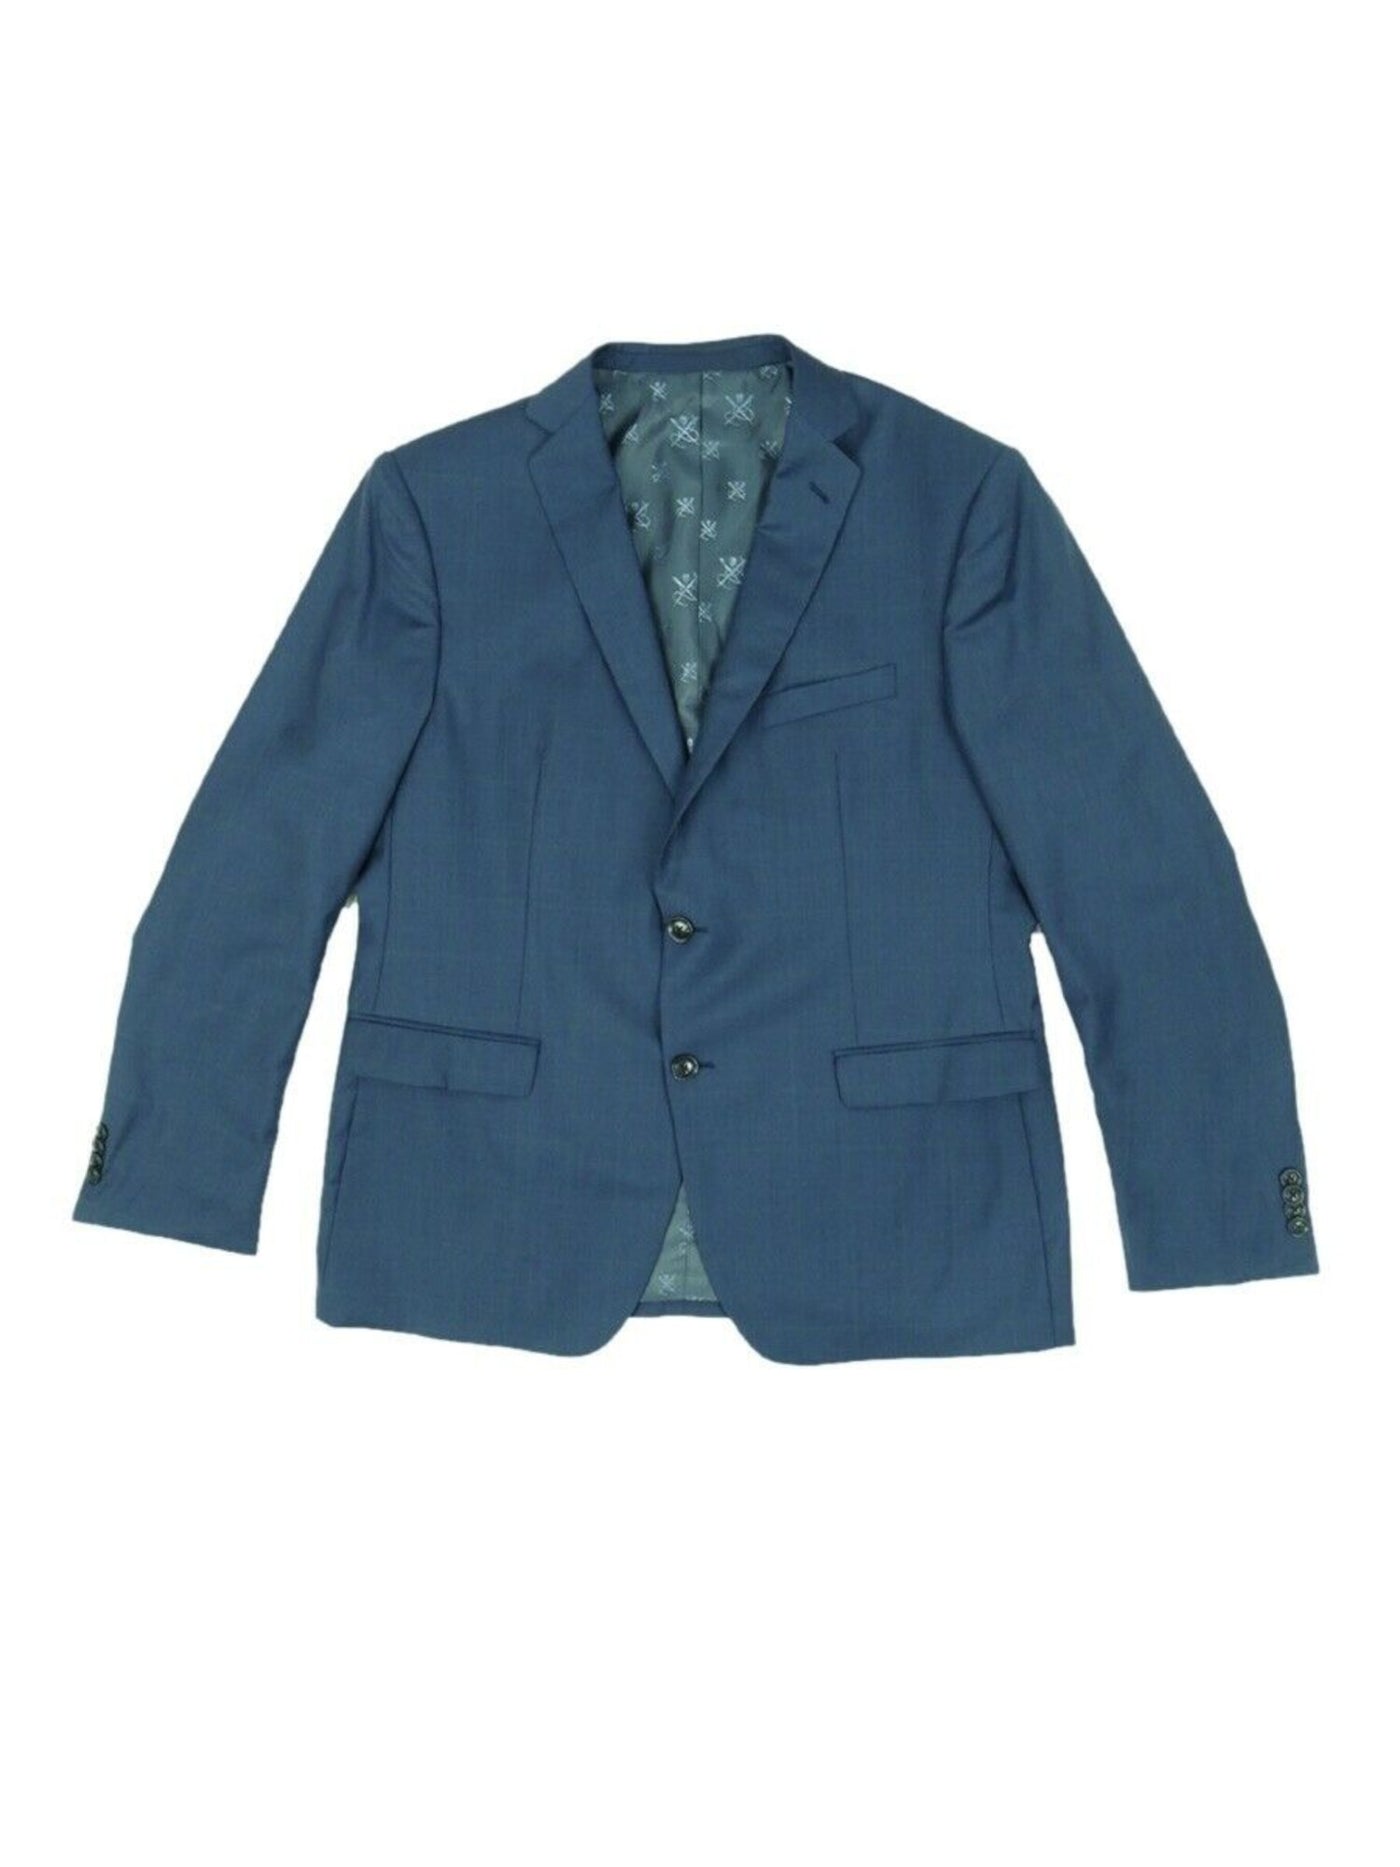 John Varvatos Mens Navy Single Breasted, Classic Fit Wool Blend Suit Separate Blazer Jacket 44L